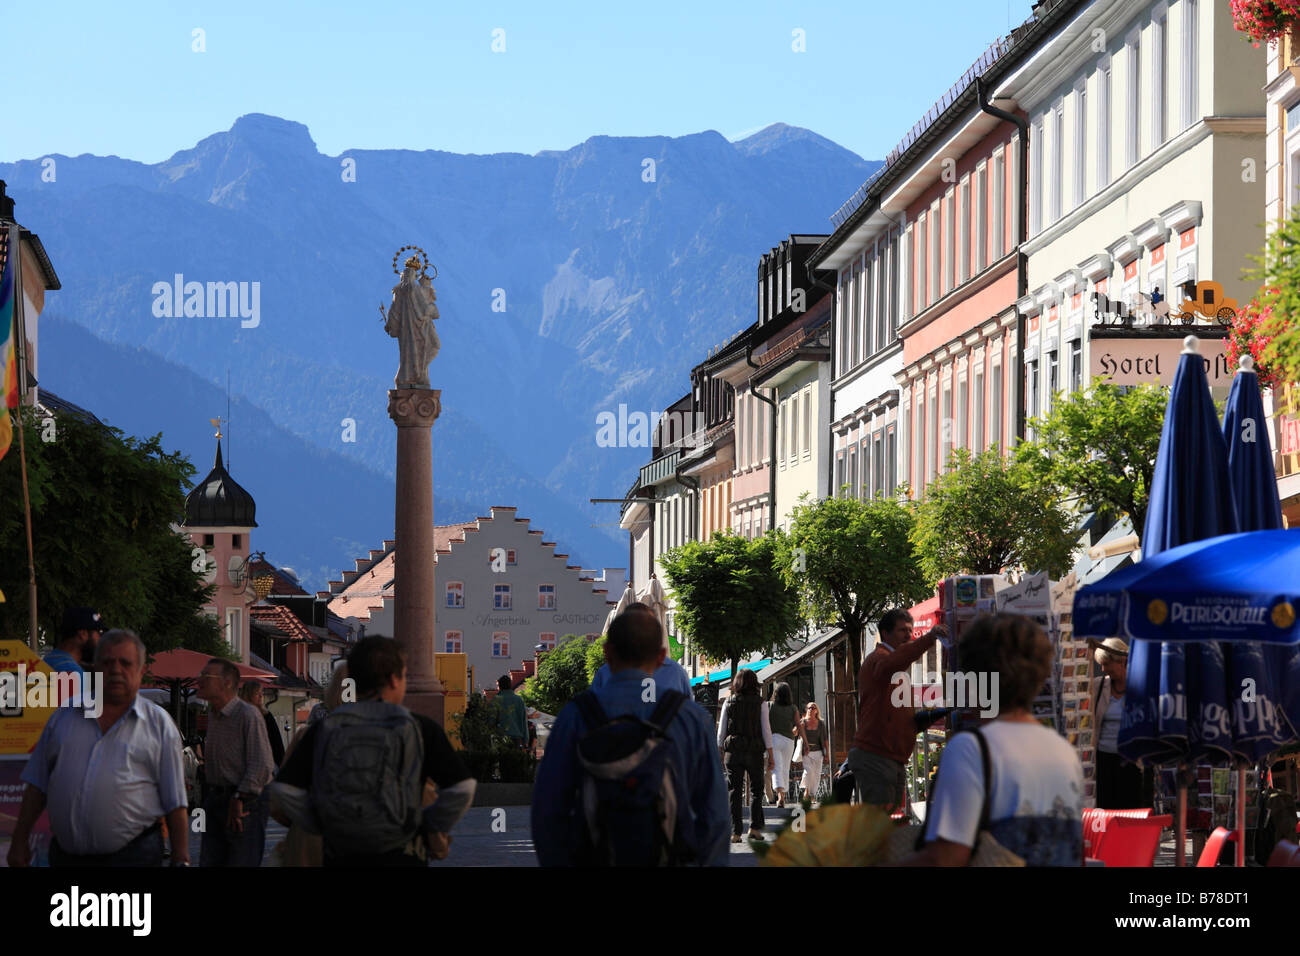 Marian column, Untermarkt market square in Murnau, Upper Bavaria, Germany, Europe Stock Photo